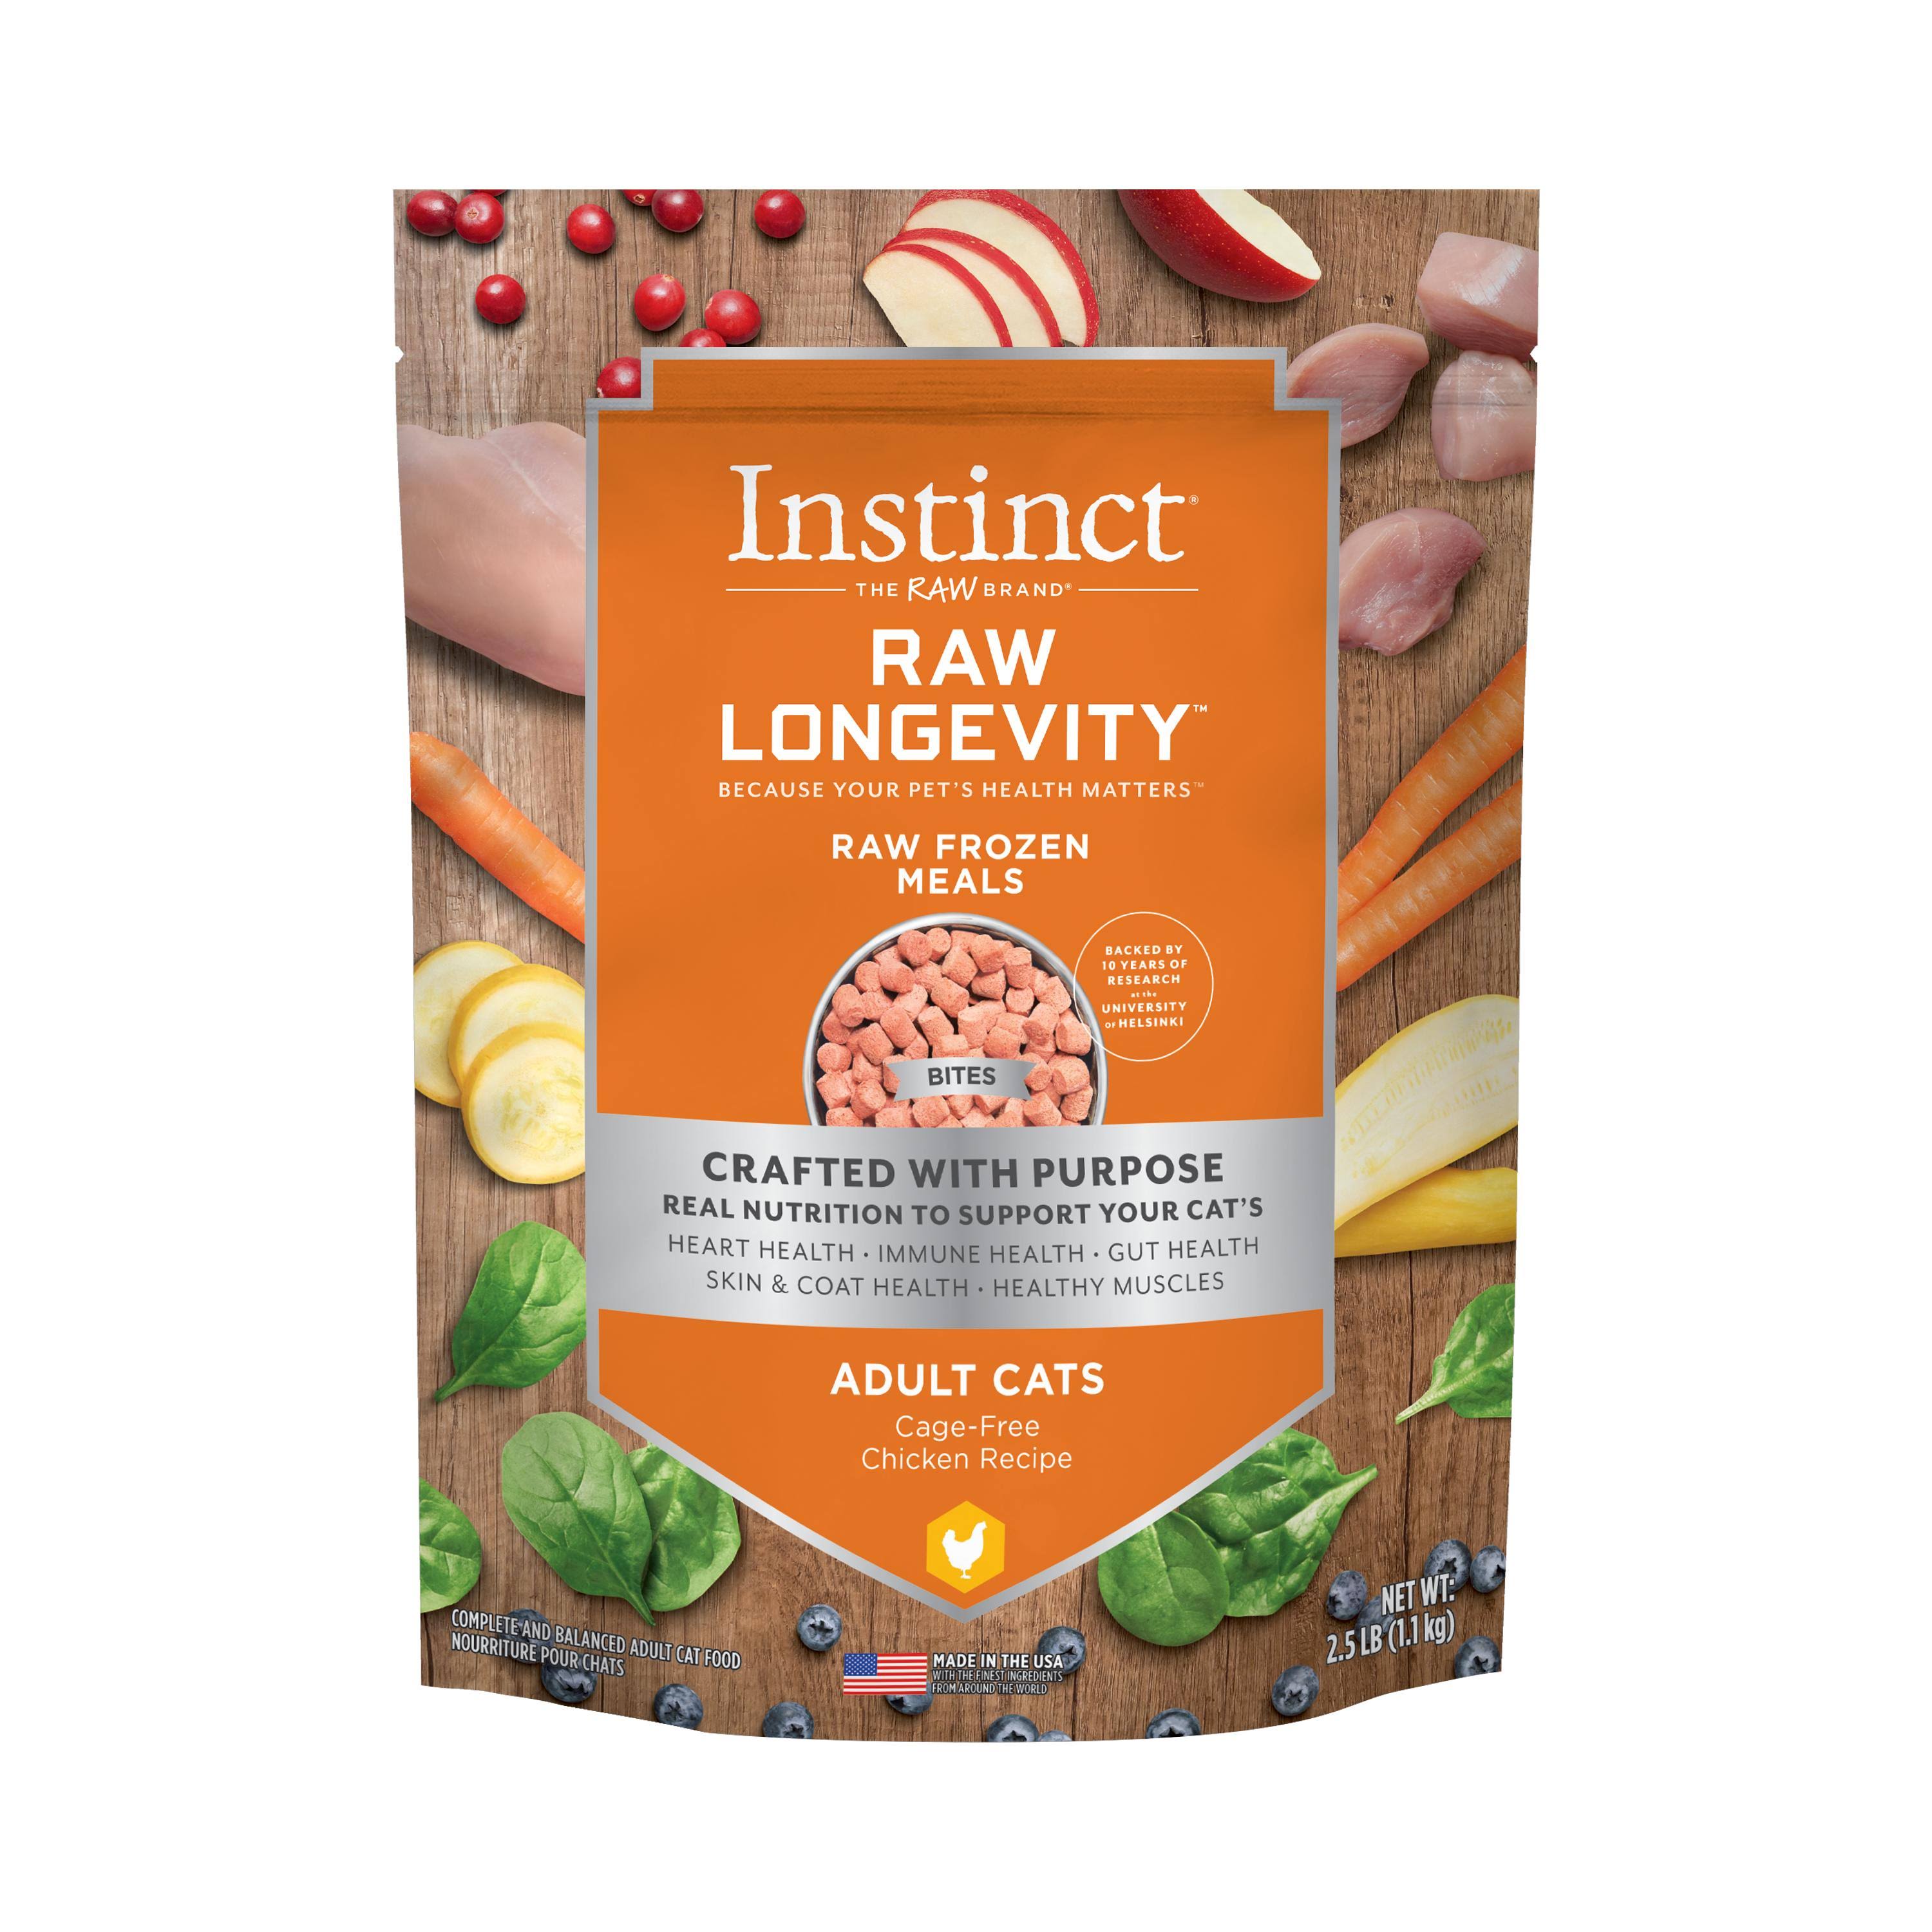 Instinct Raw Longevity Frozen Bites Cage-Free Chicken Recipe Cat Food 2.5 lb